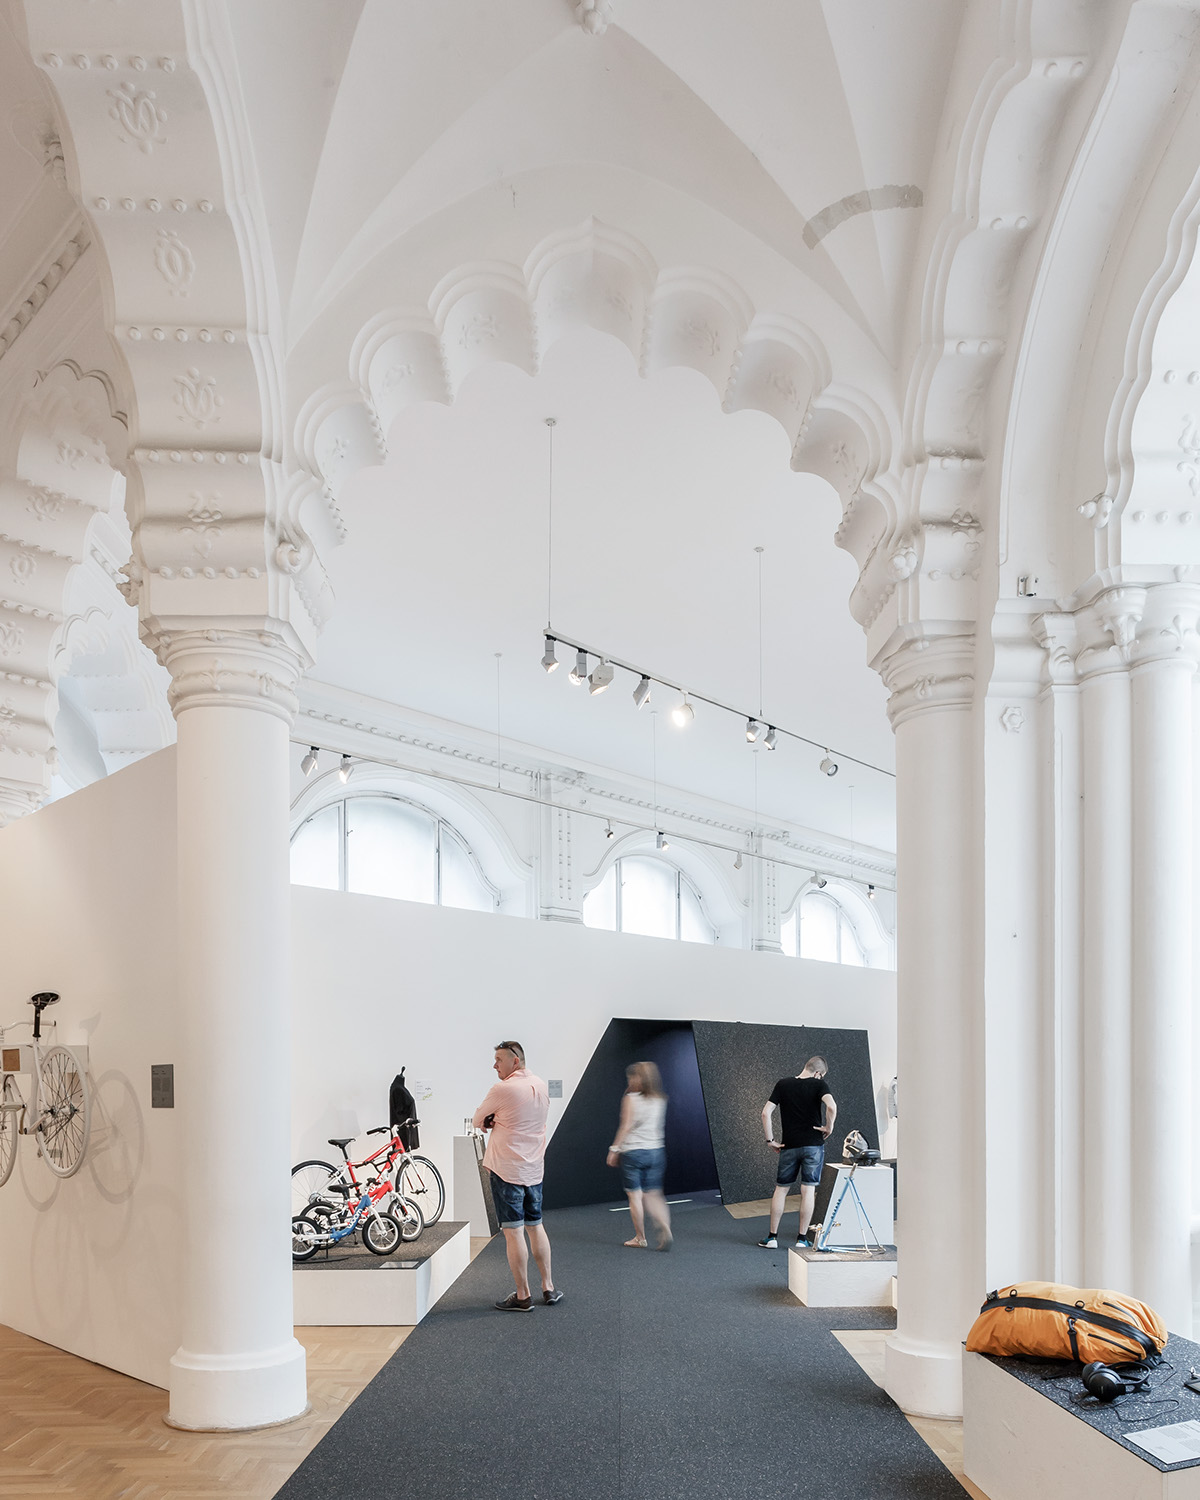 Exhibition  design Interior rubber Bike Bicycle installation interactive